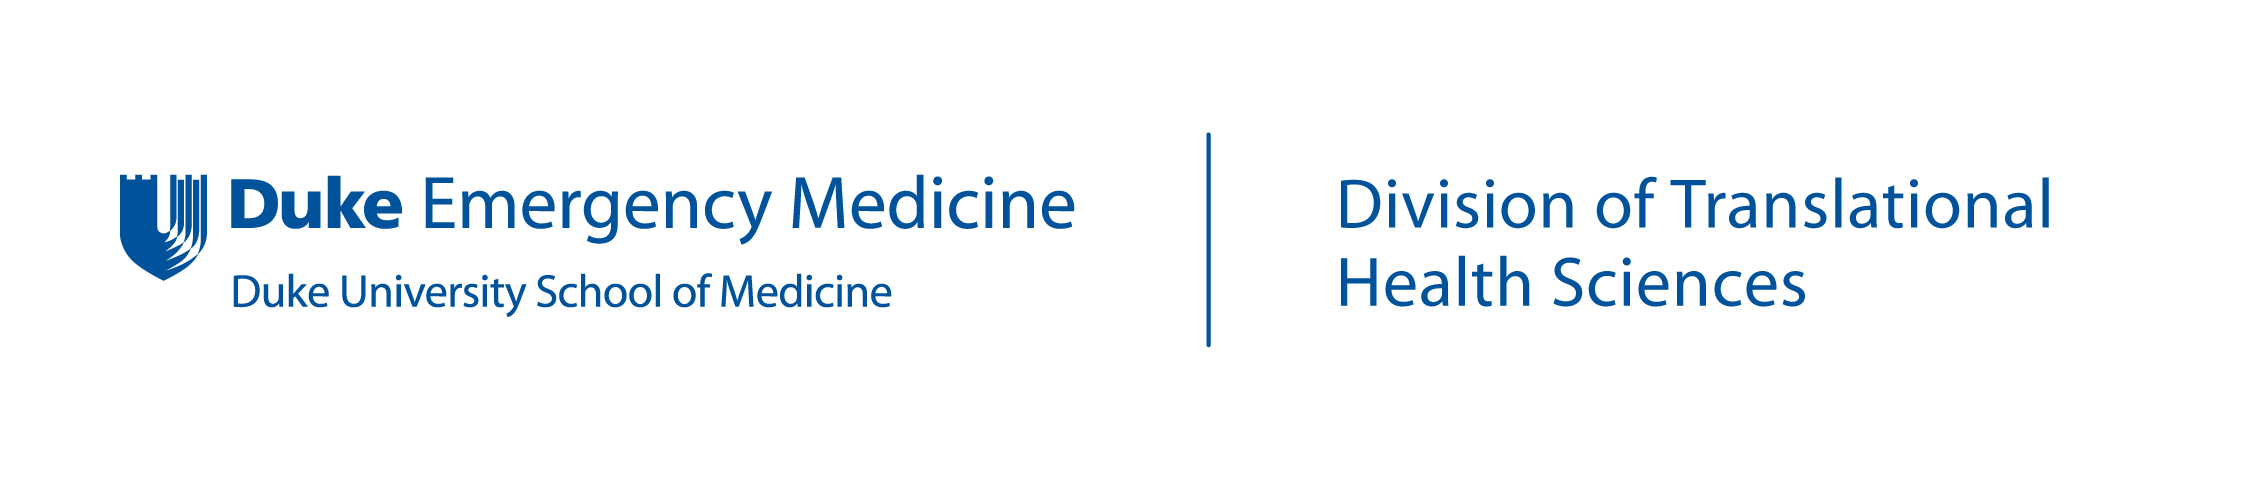 Division of Translational Health Sciences logo